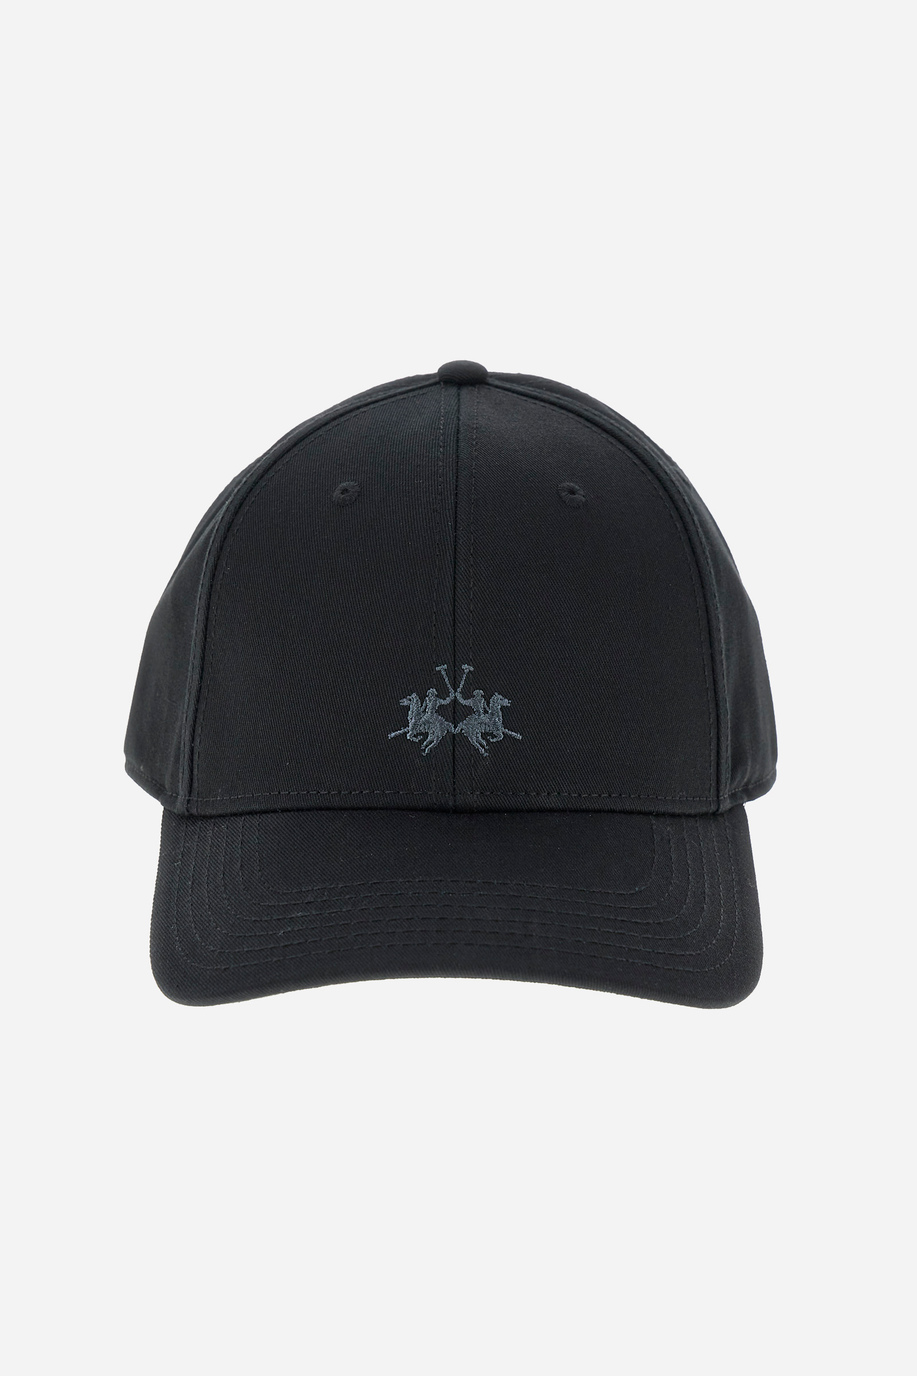 Unisex baseball cap in twill cotton - Hats | La Martina - Official Online Shop